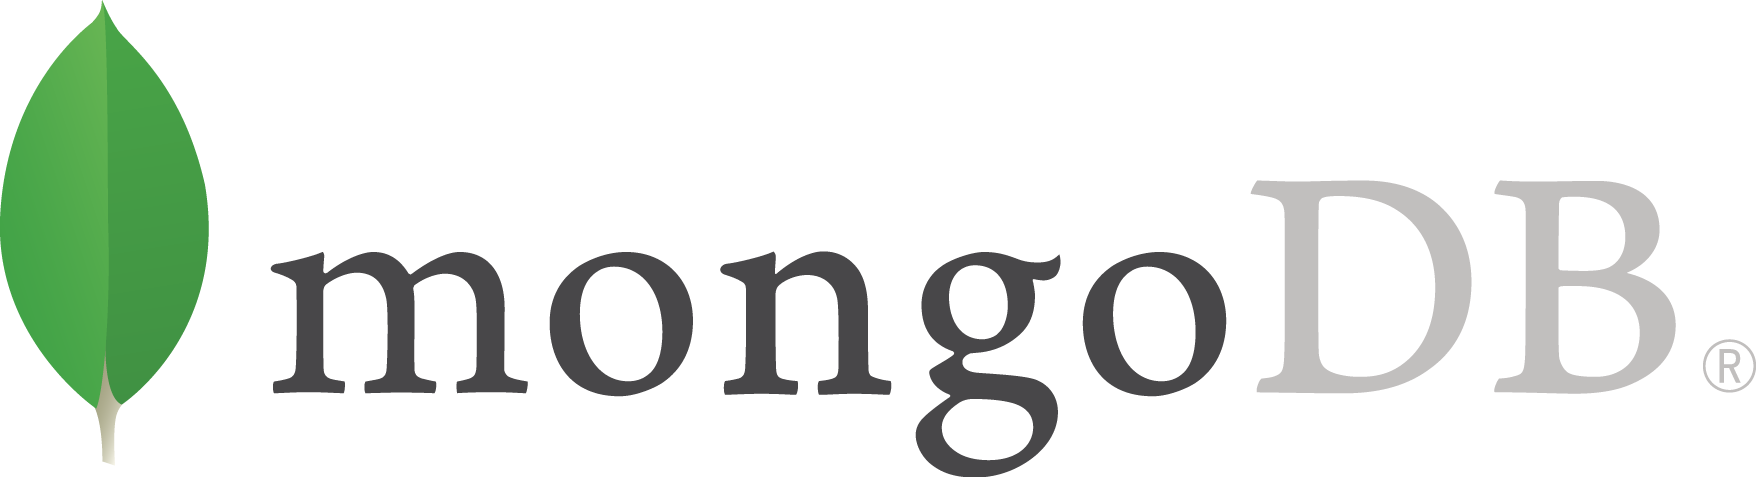 mongodb_logo1-76twgcu2dm.png